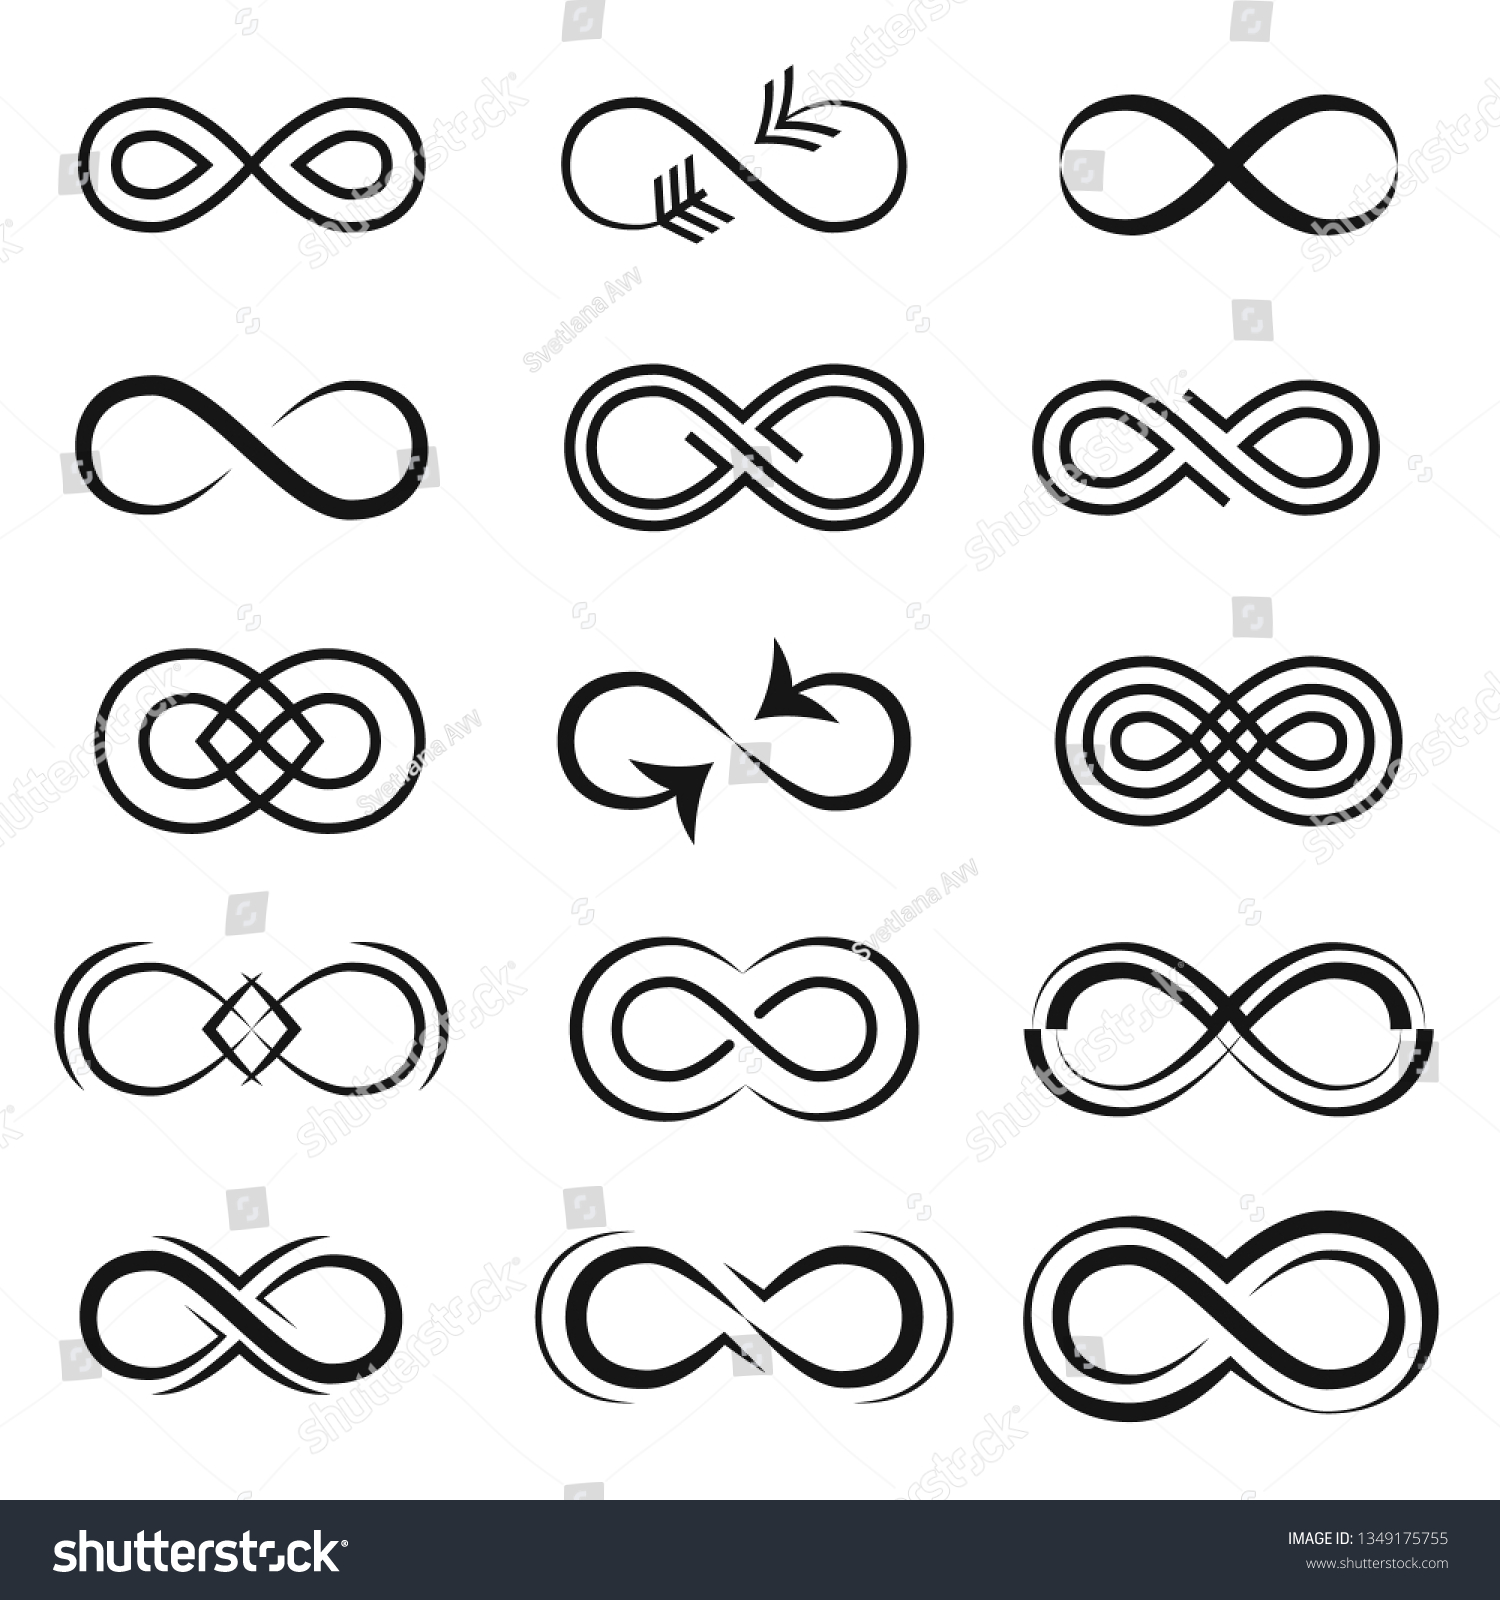 1 Infinity synbol Images, Stock Photos & Vectors | Shutterstock